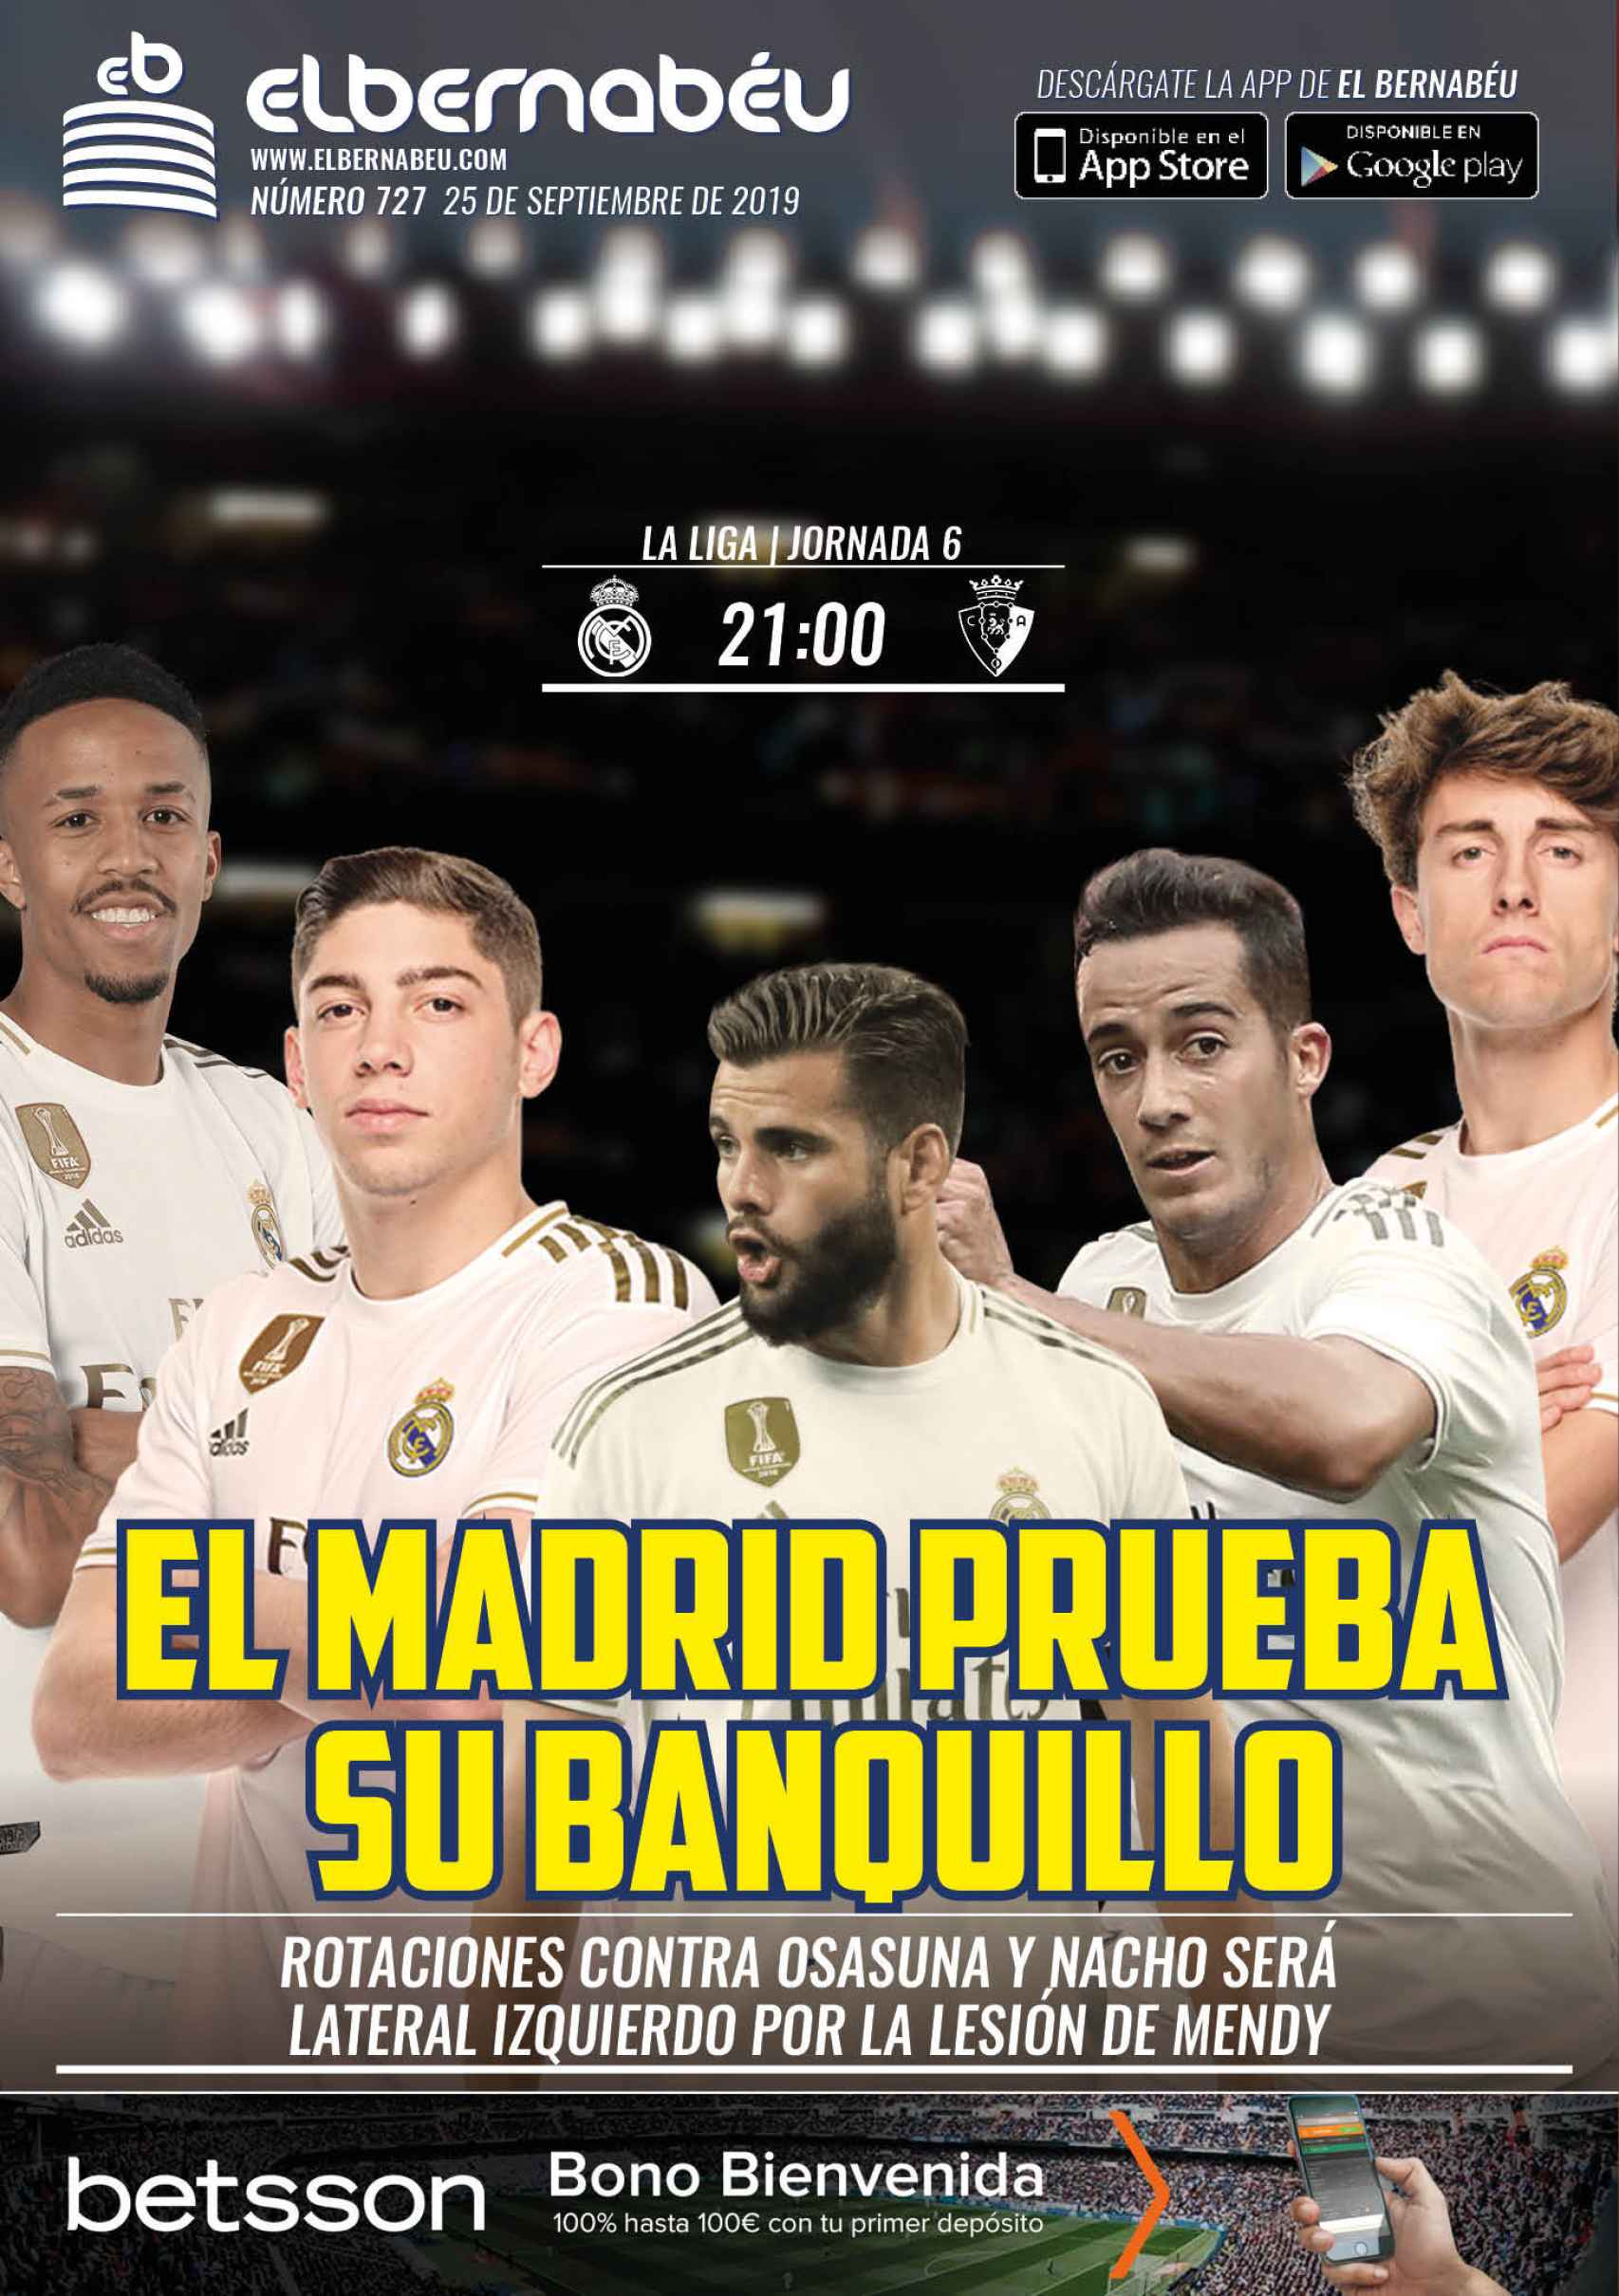 La portada de El Bernabéu (25/09/2019)